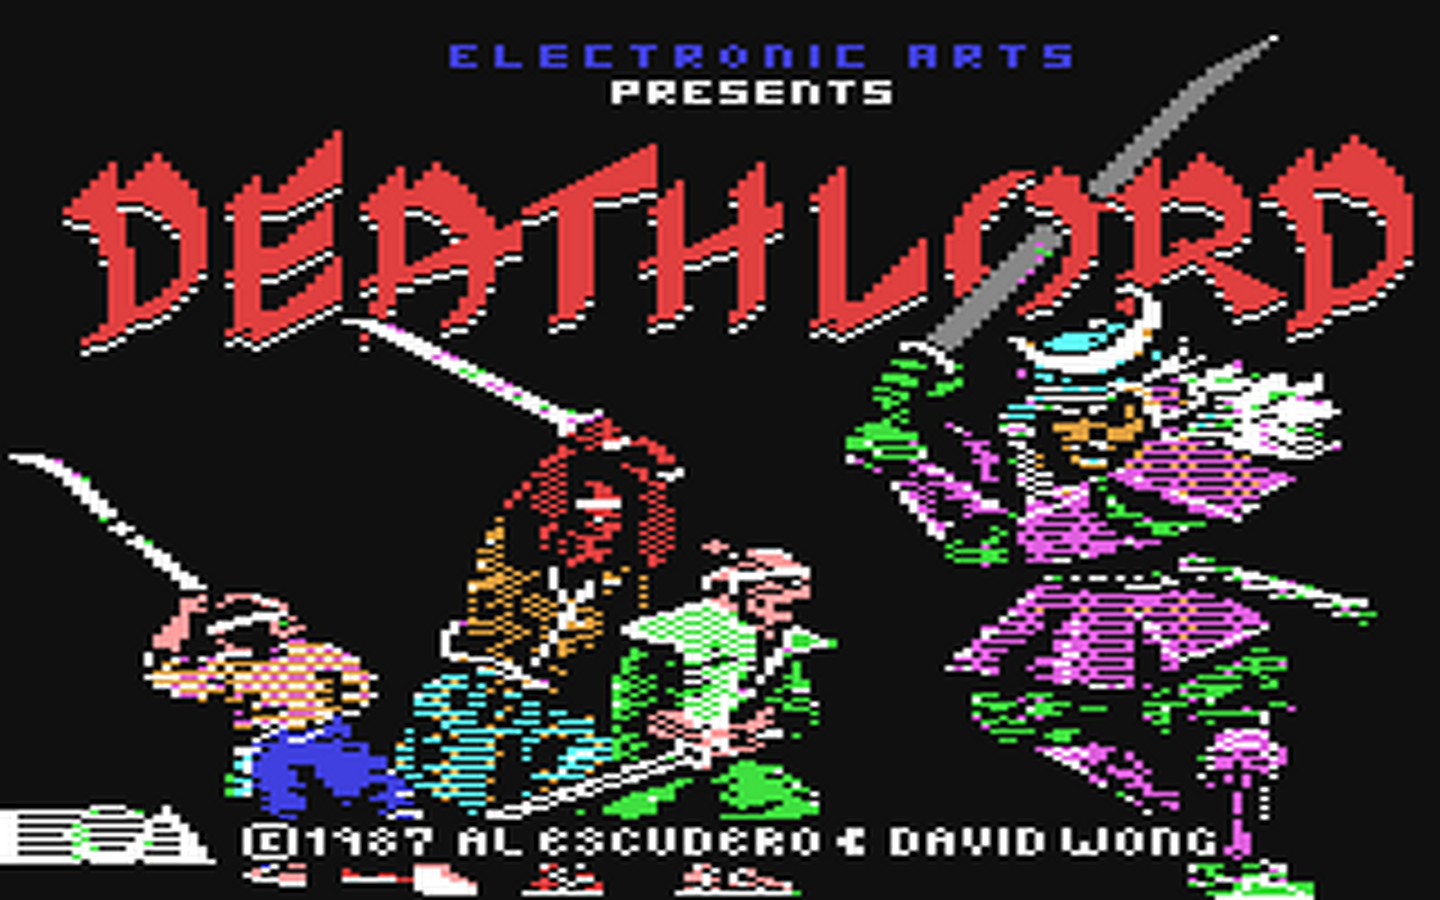 C64 GameBase Deathlord Electronic_Arts 1987